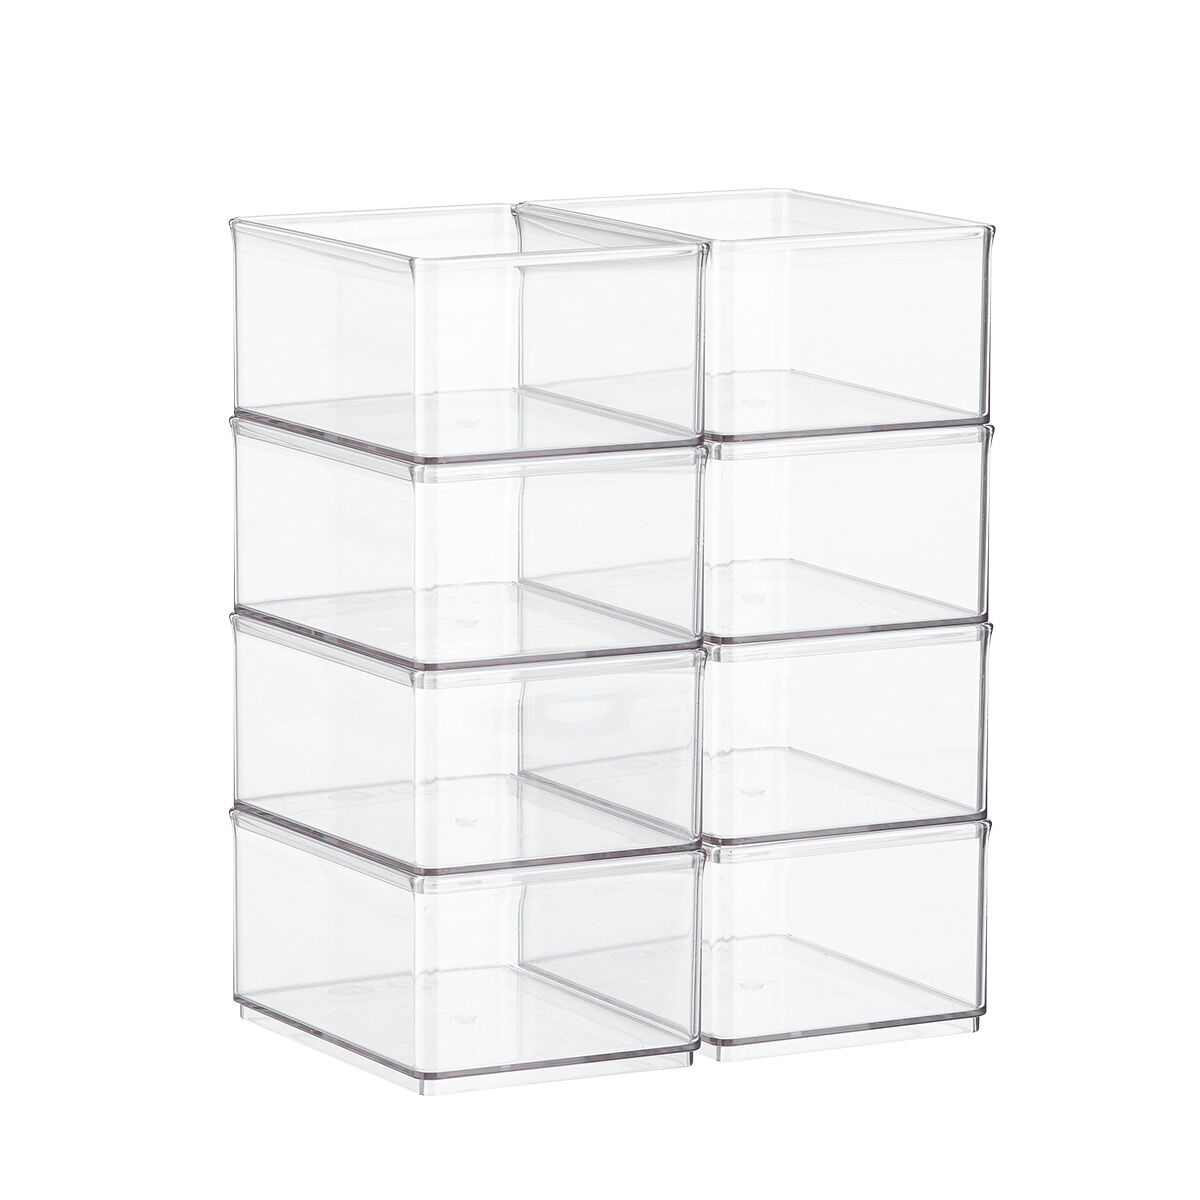 The Container Store Case of 8 T .H .E . Medium Bin Organizer Clear